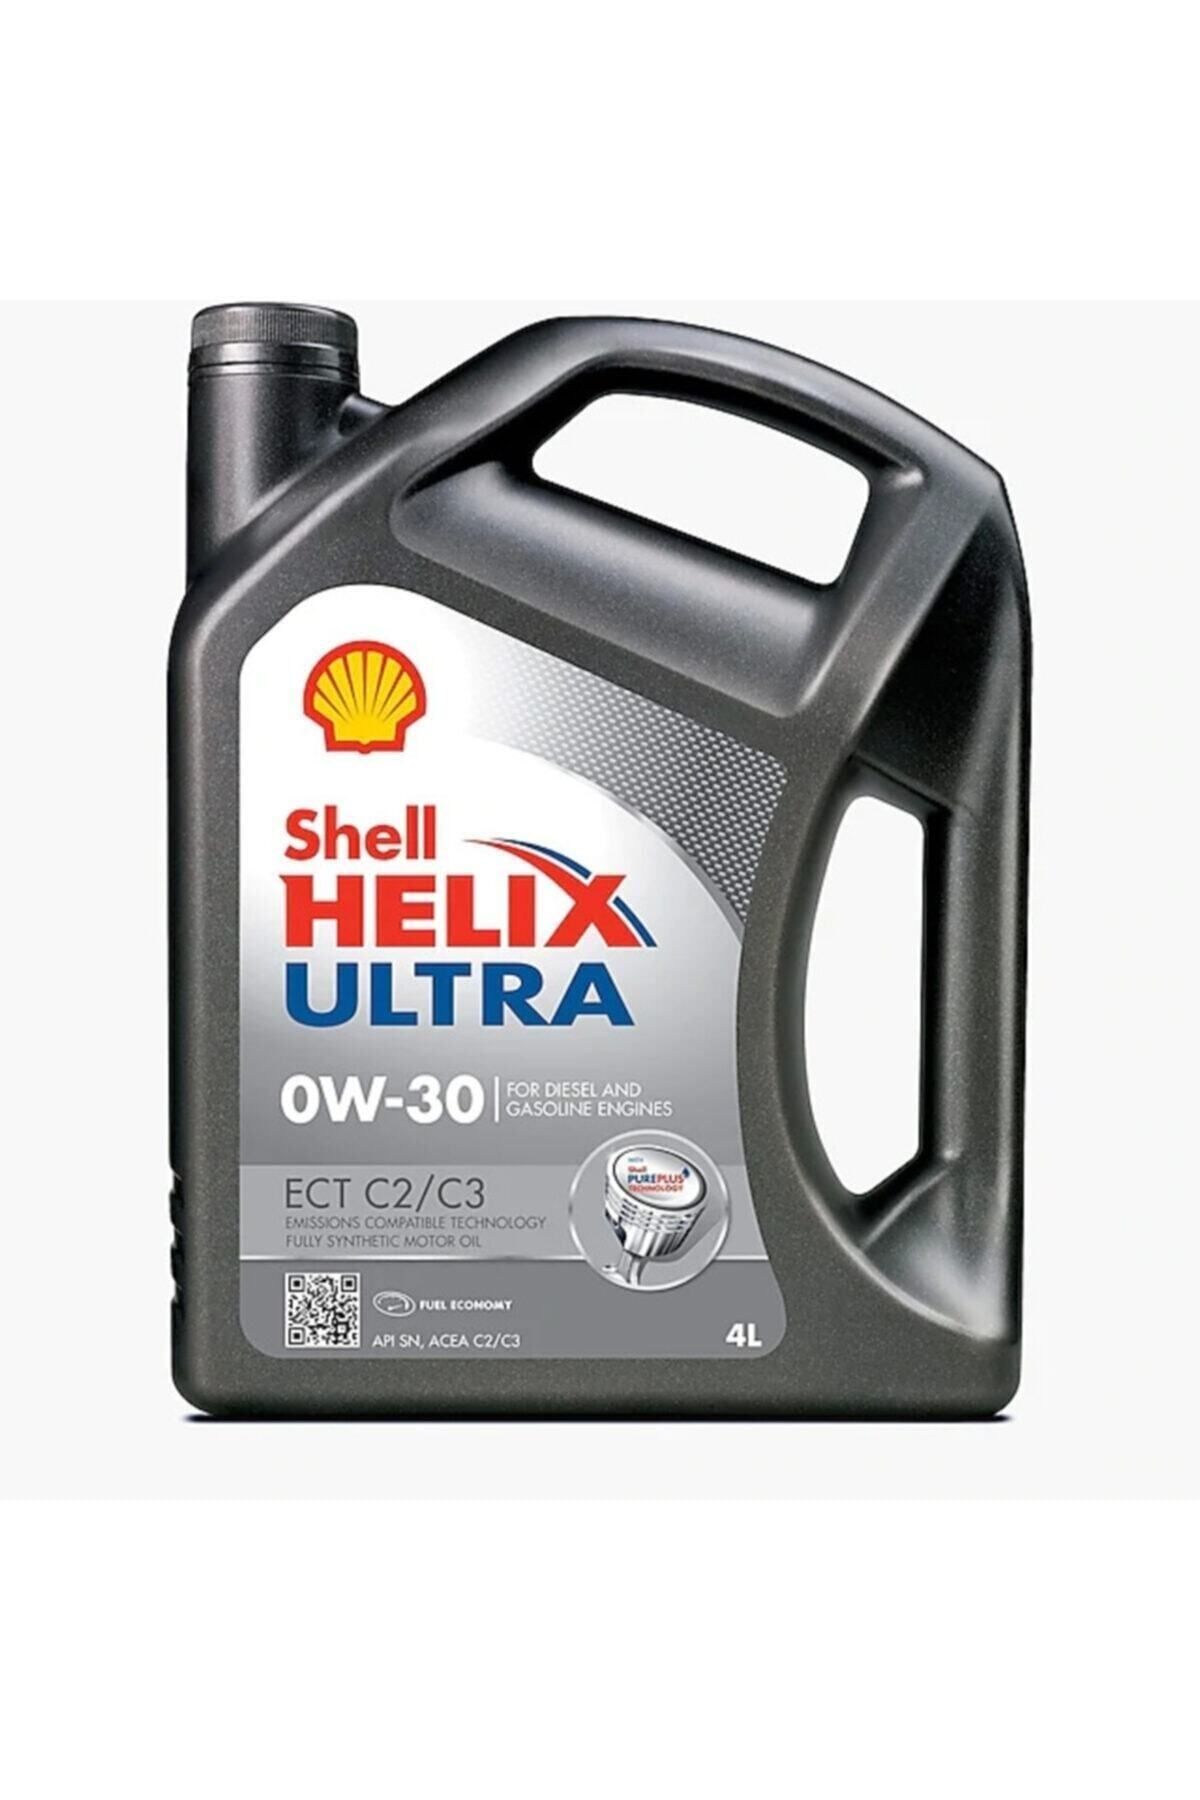 Shell Helix Ultra Ect C2/c3 0w-30 - 5 Litre (2023) Üretim -ect-5-2